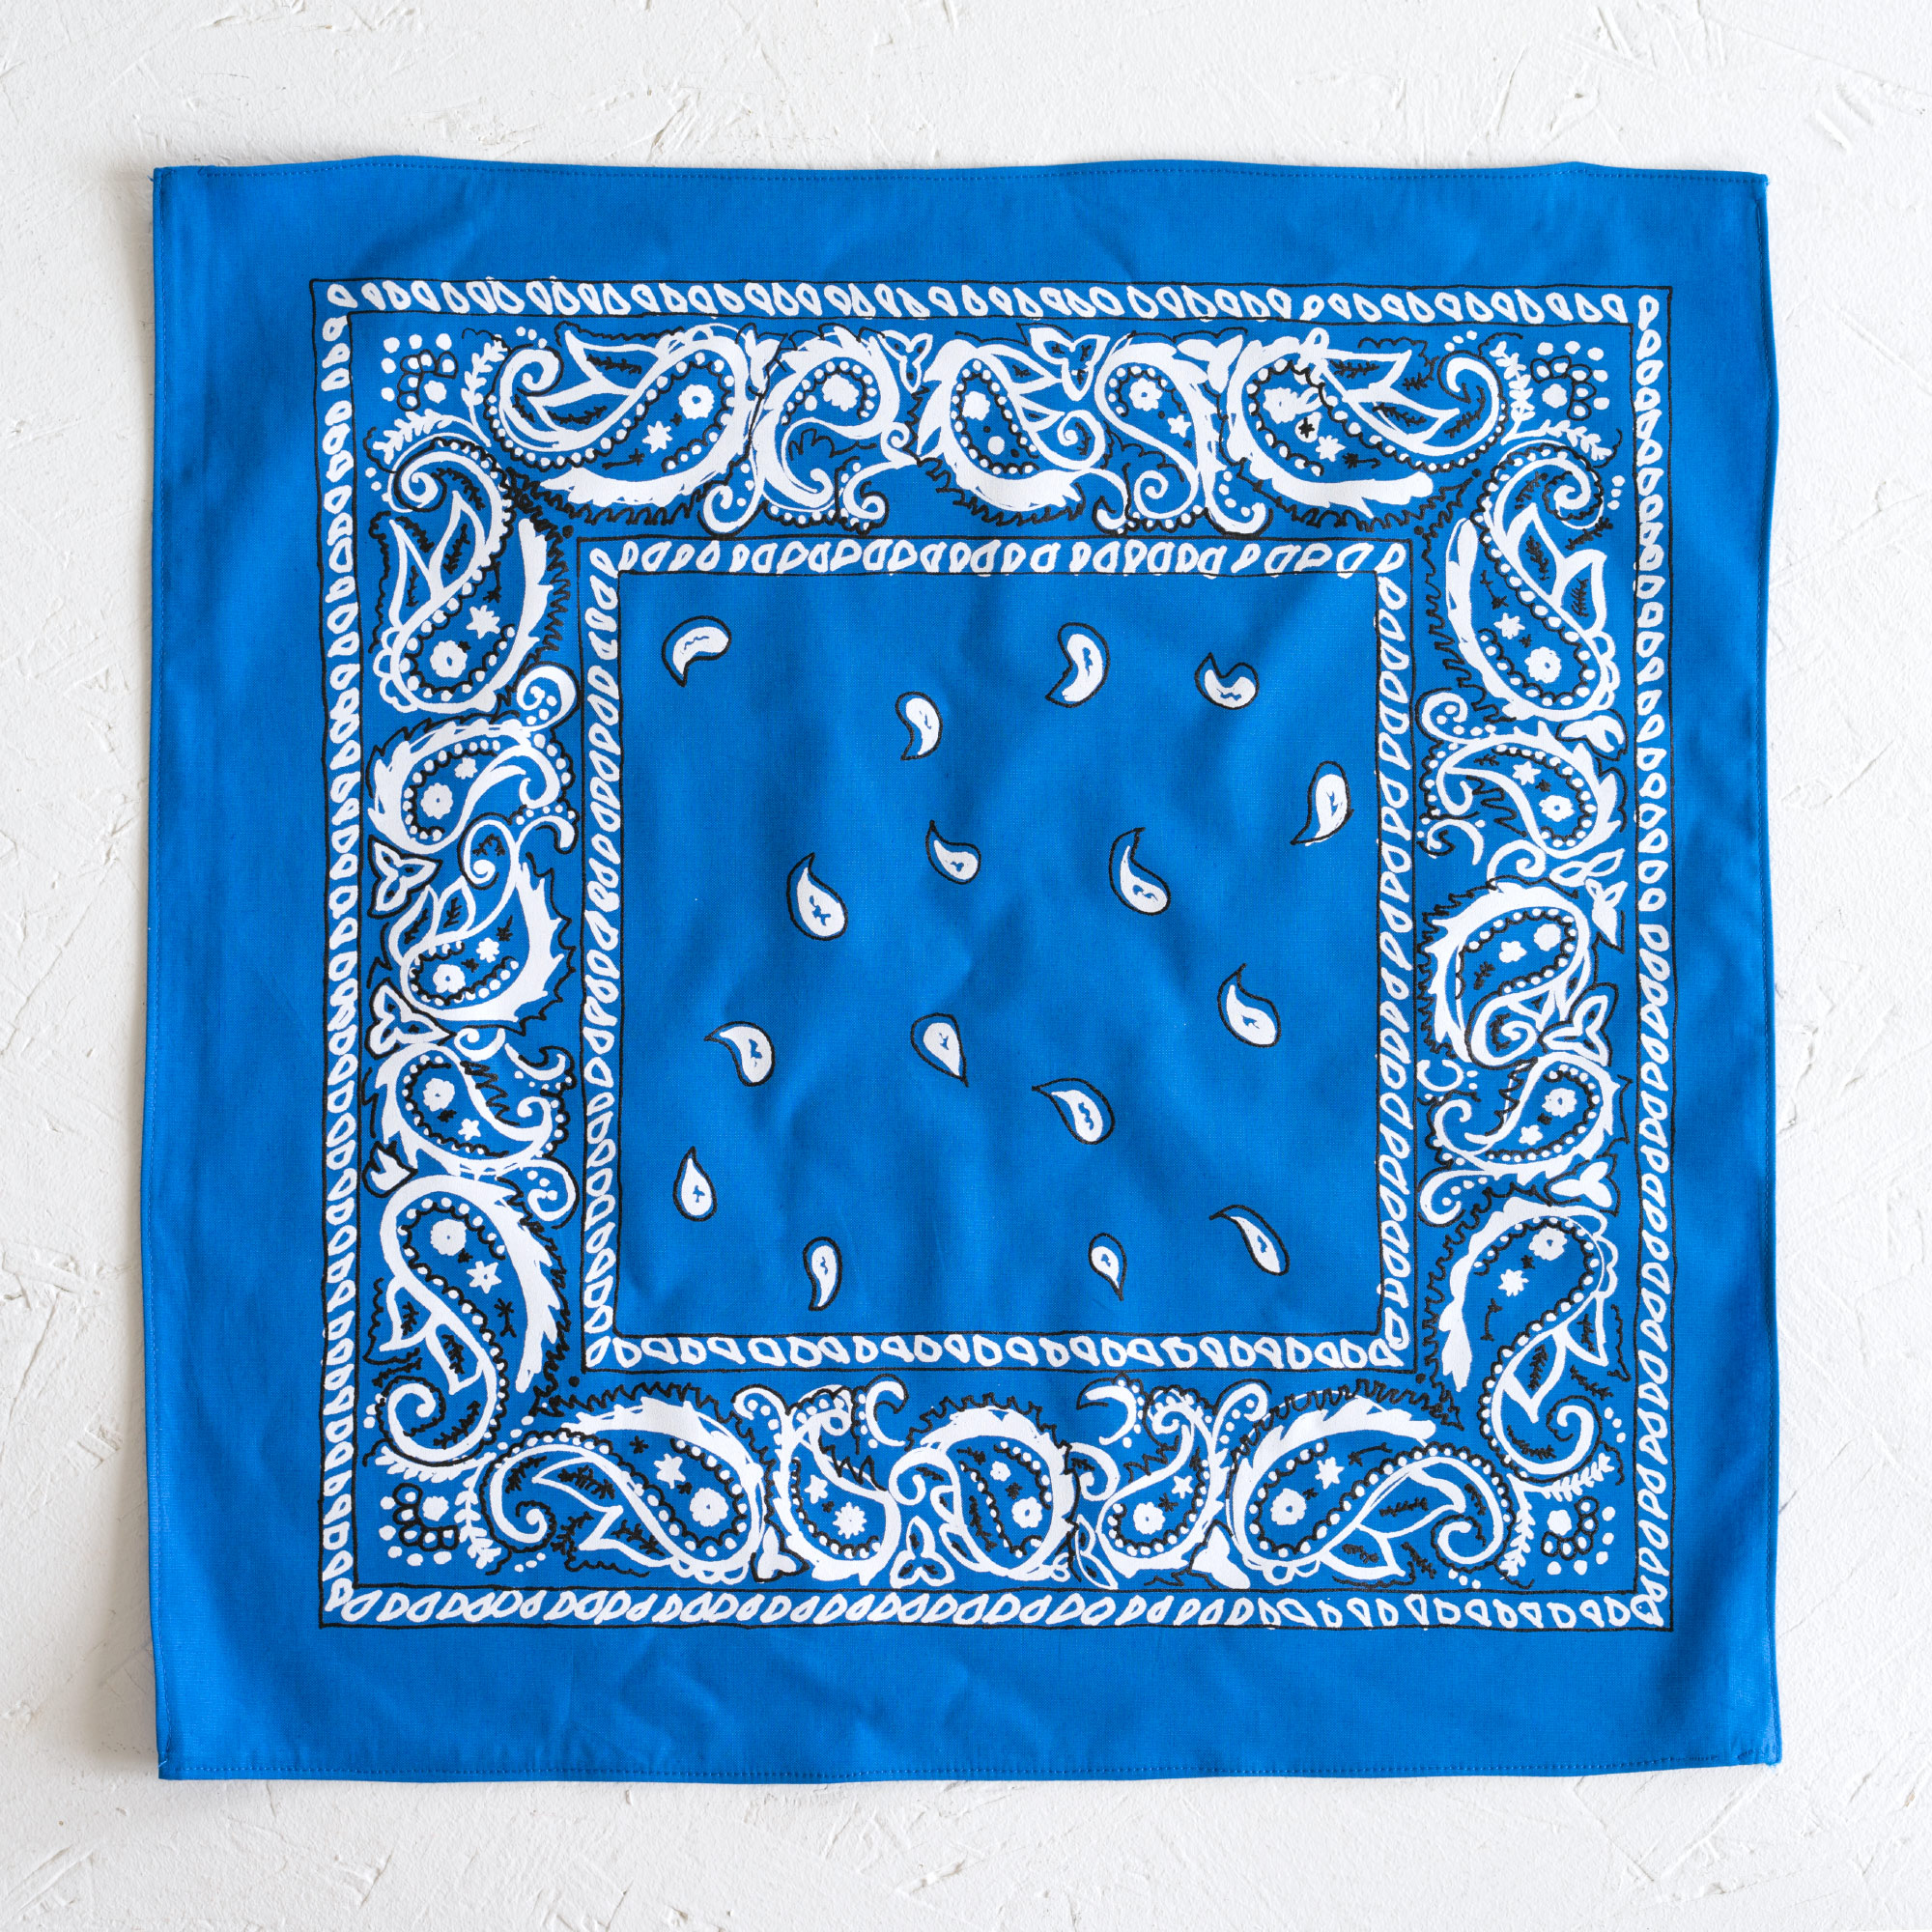 Nancy Davidson, *Hanky Code* (Medium Blue), 2016, Two color silkscreen on hand cut & sewn cotton, 17 x 17 inches (43.18 x 43.18 cm)